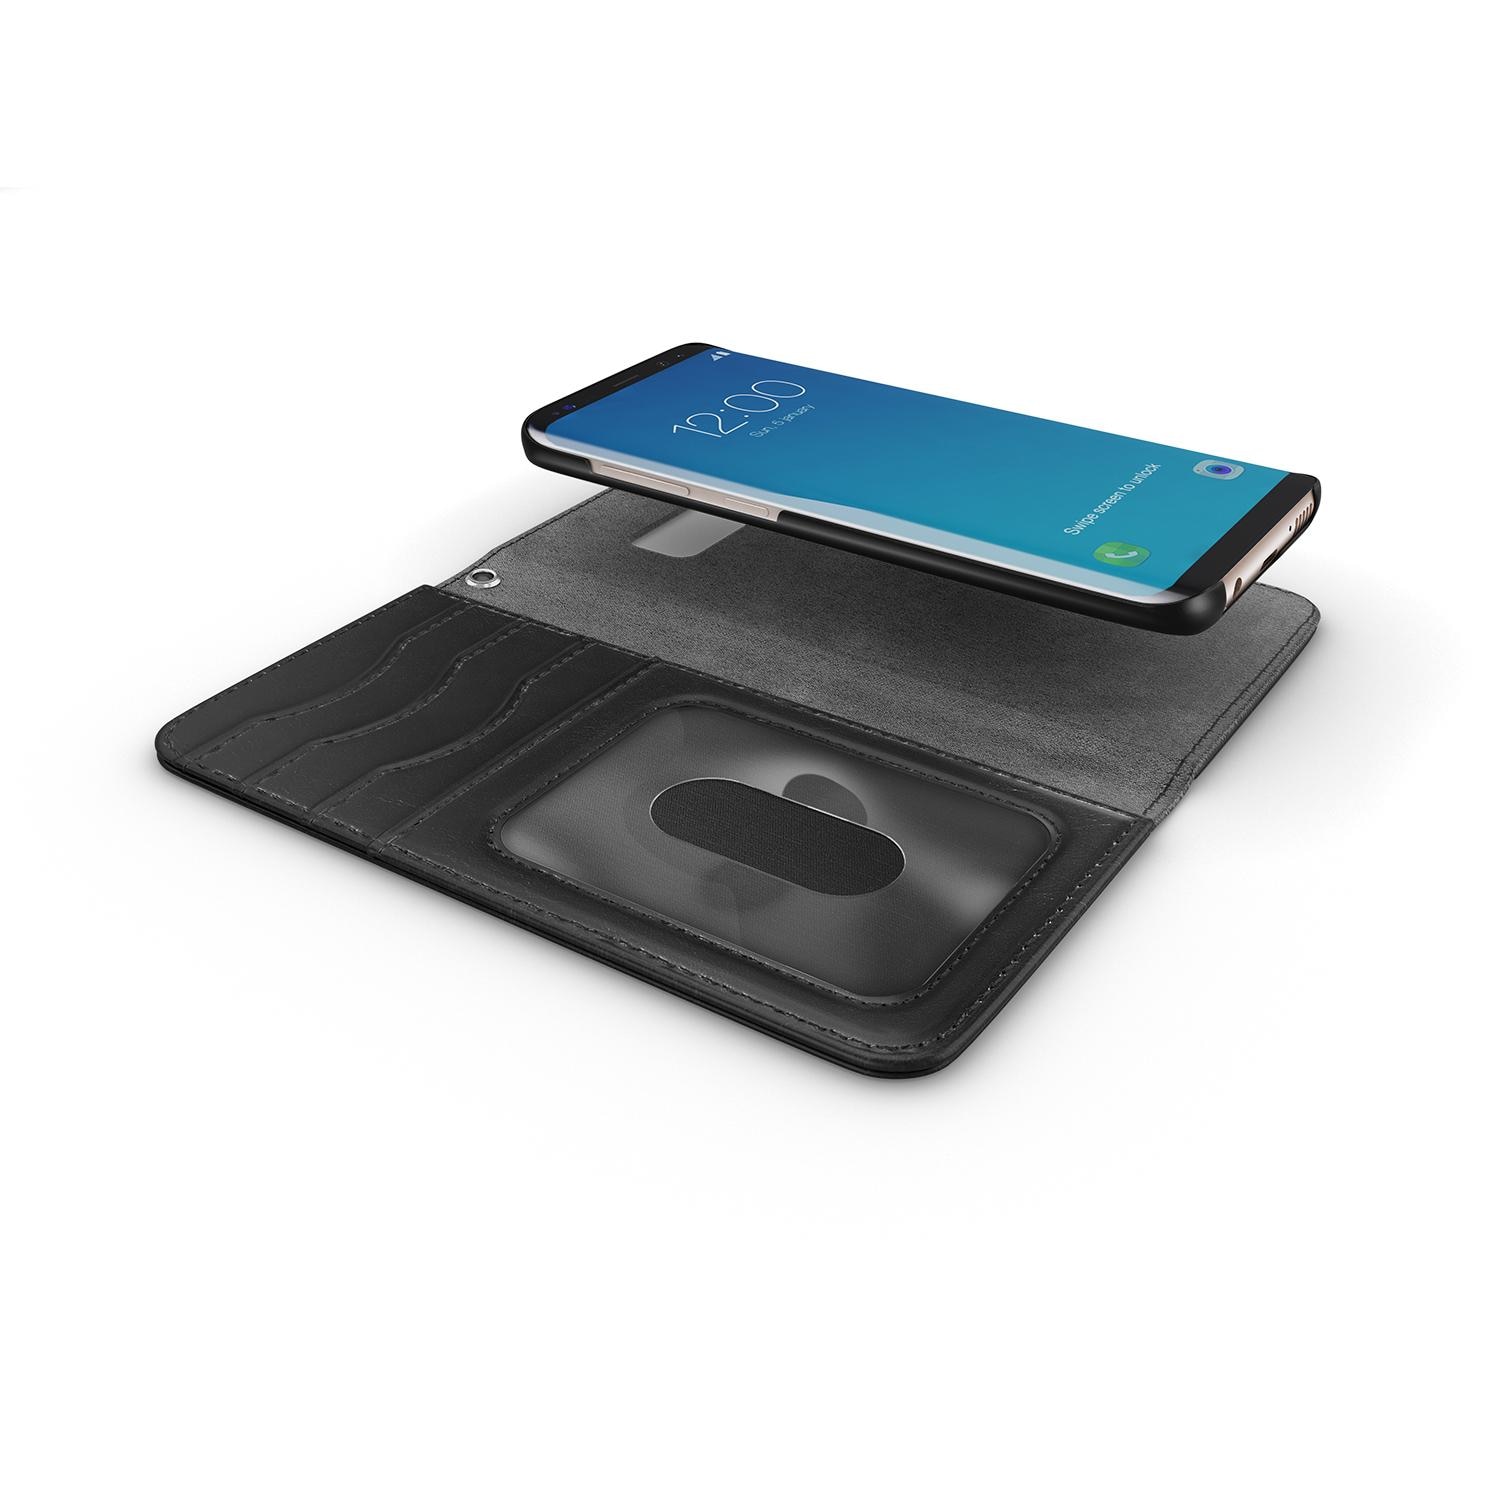 Magnet Wallet+ Samsung Galaxy S9 Black